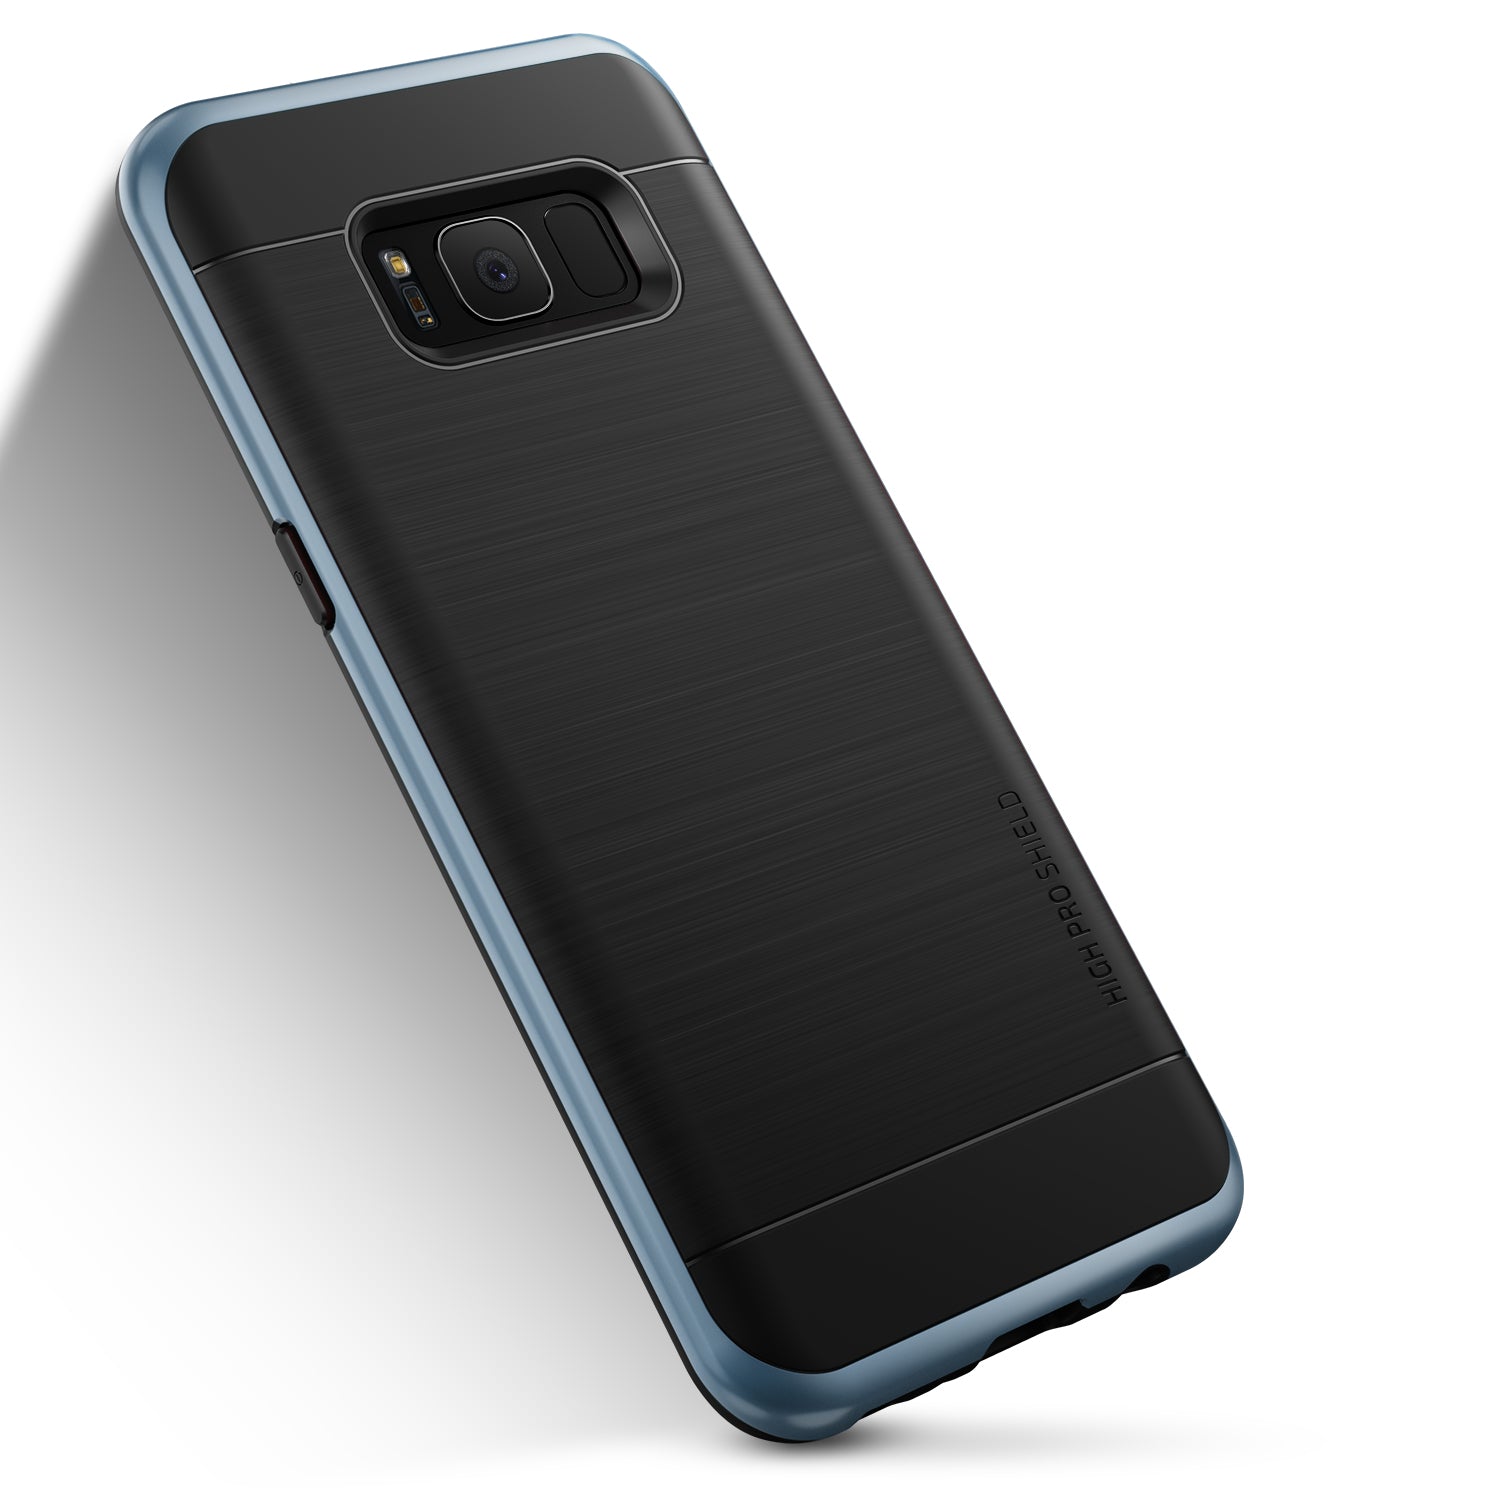 High Pro Shield For Galaxy S8 Anti Shocks Case Original From VRS Black / Blue